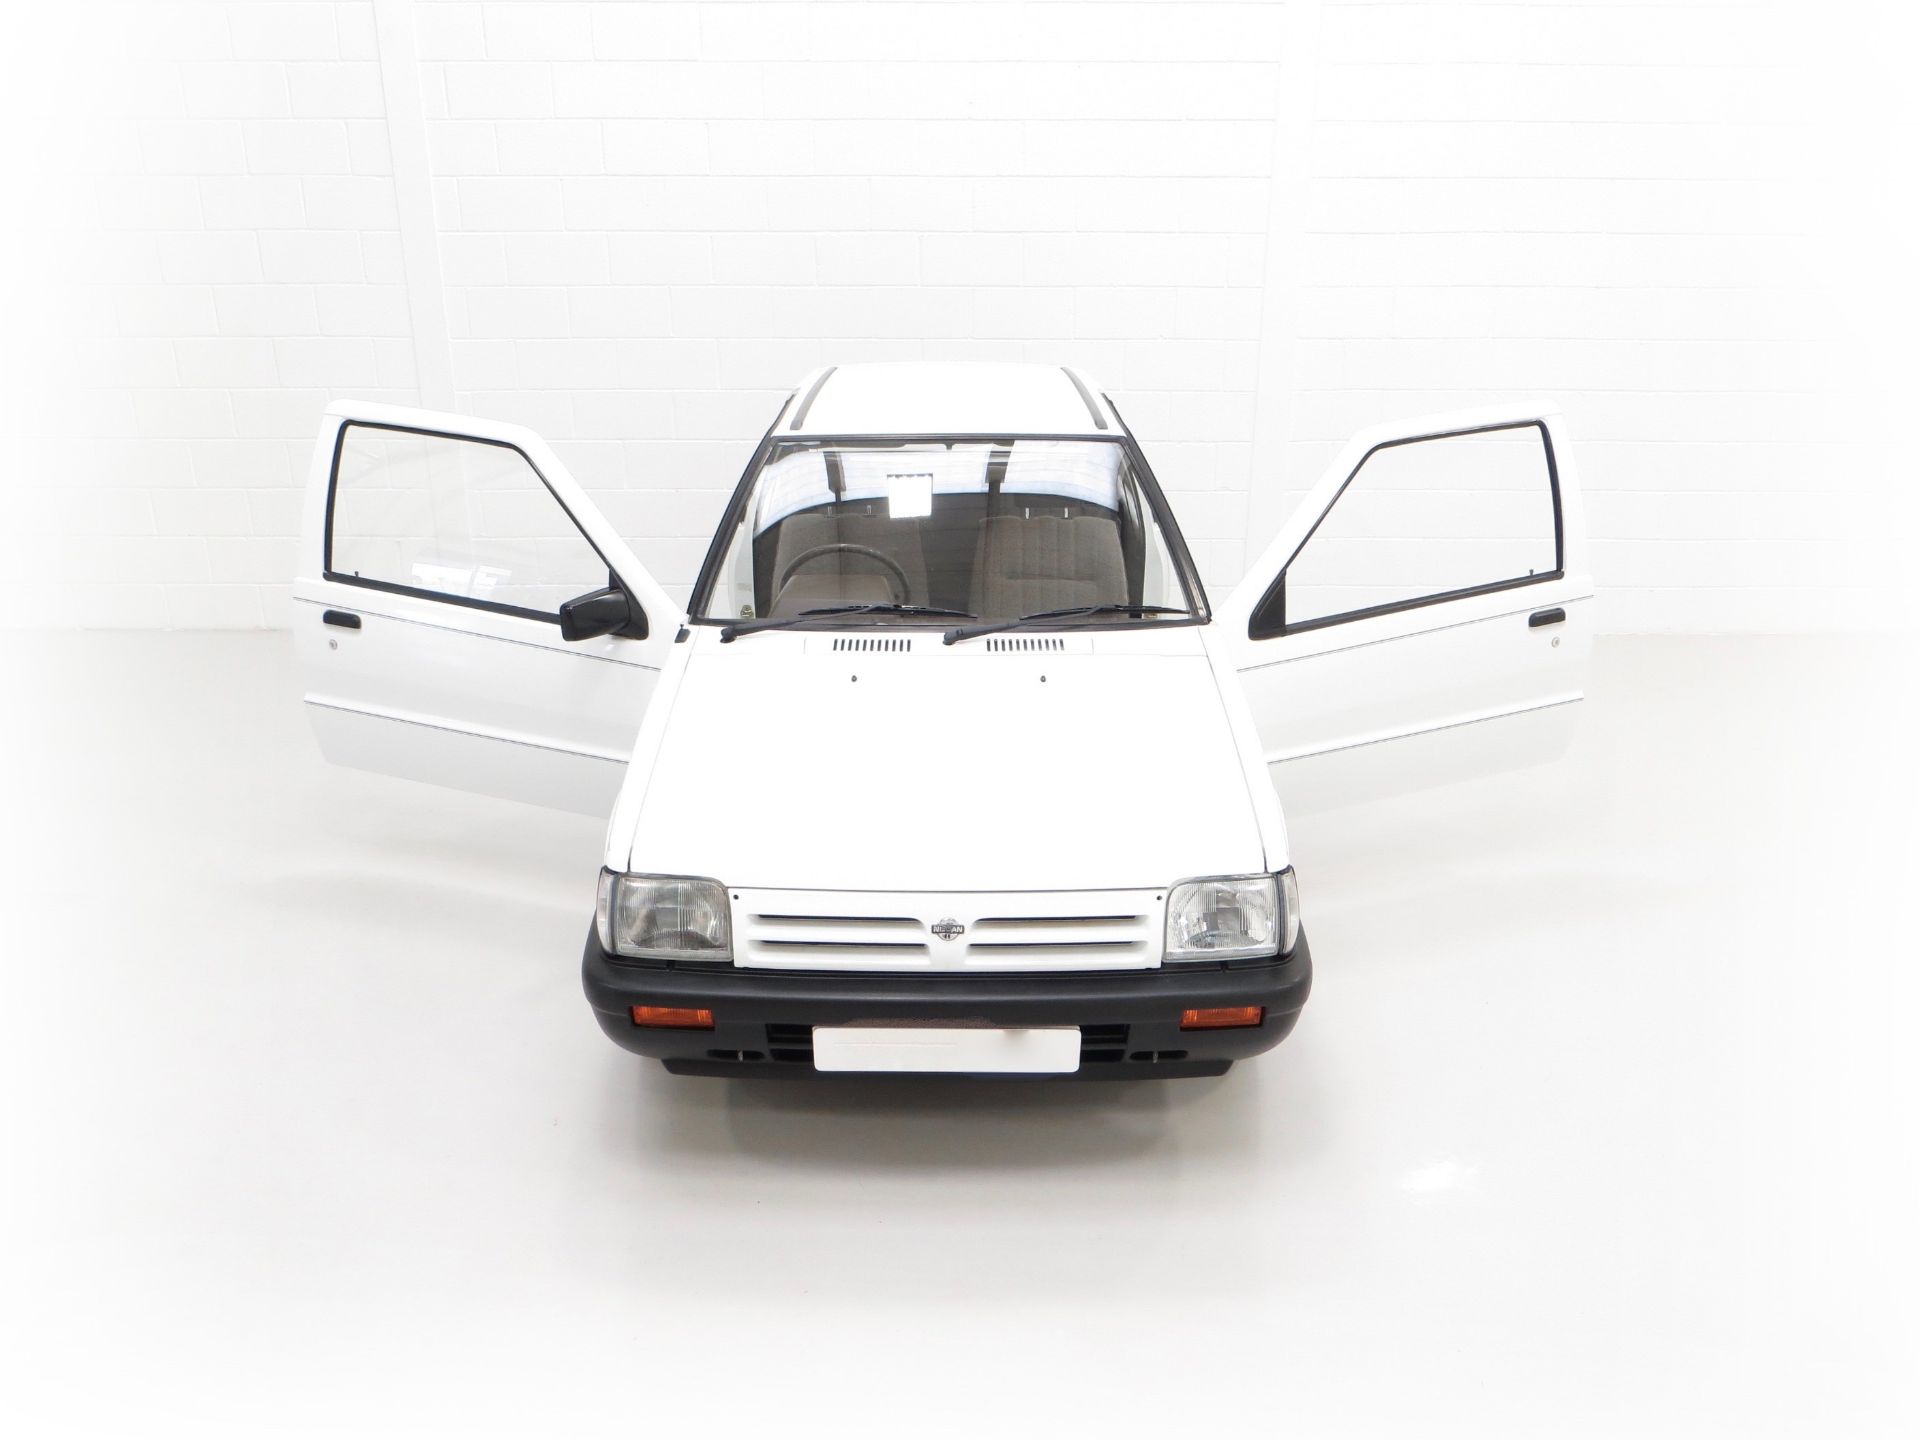 1991, Nissan Micra 1.0 Premium - Image 47 of 118